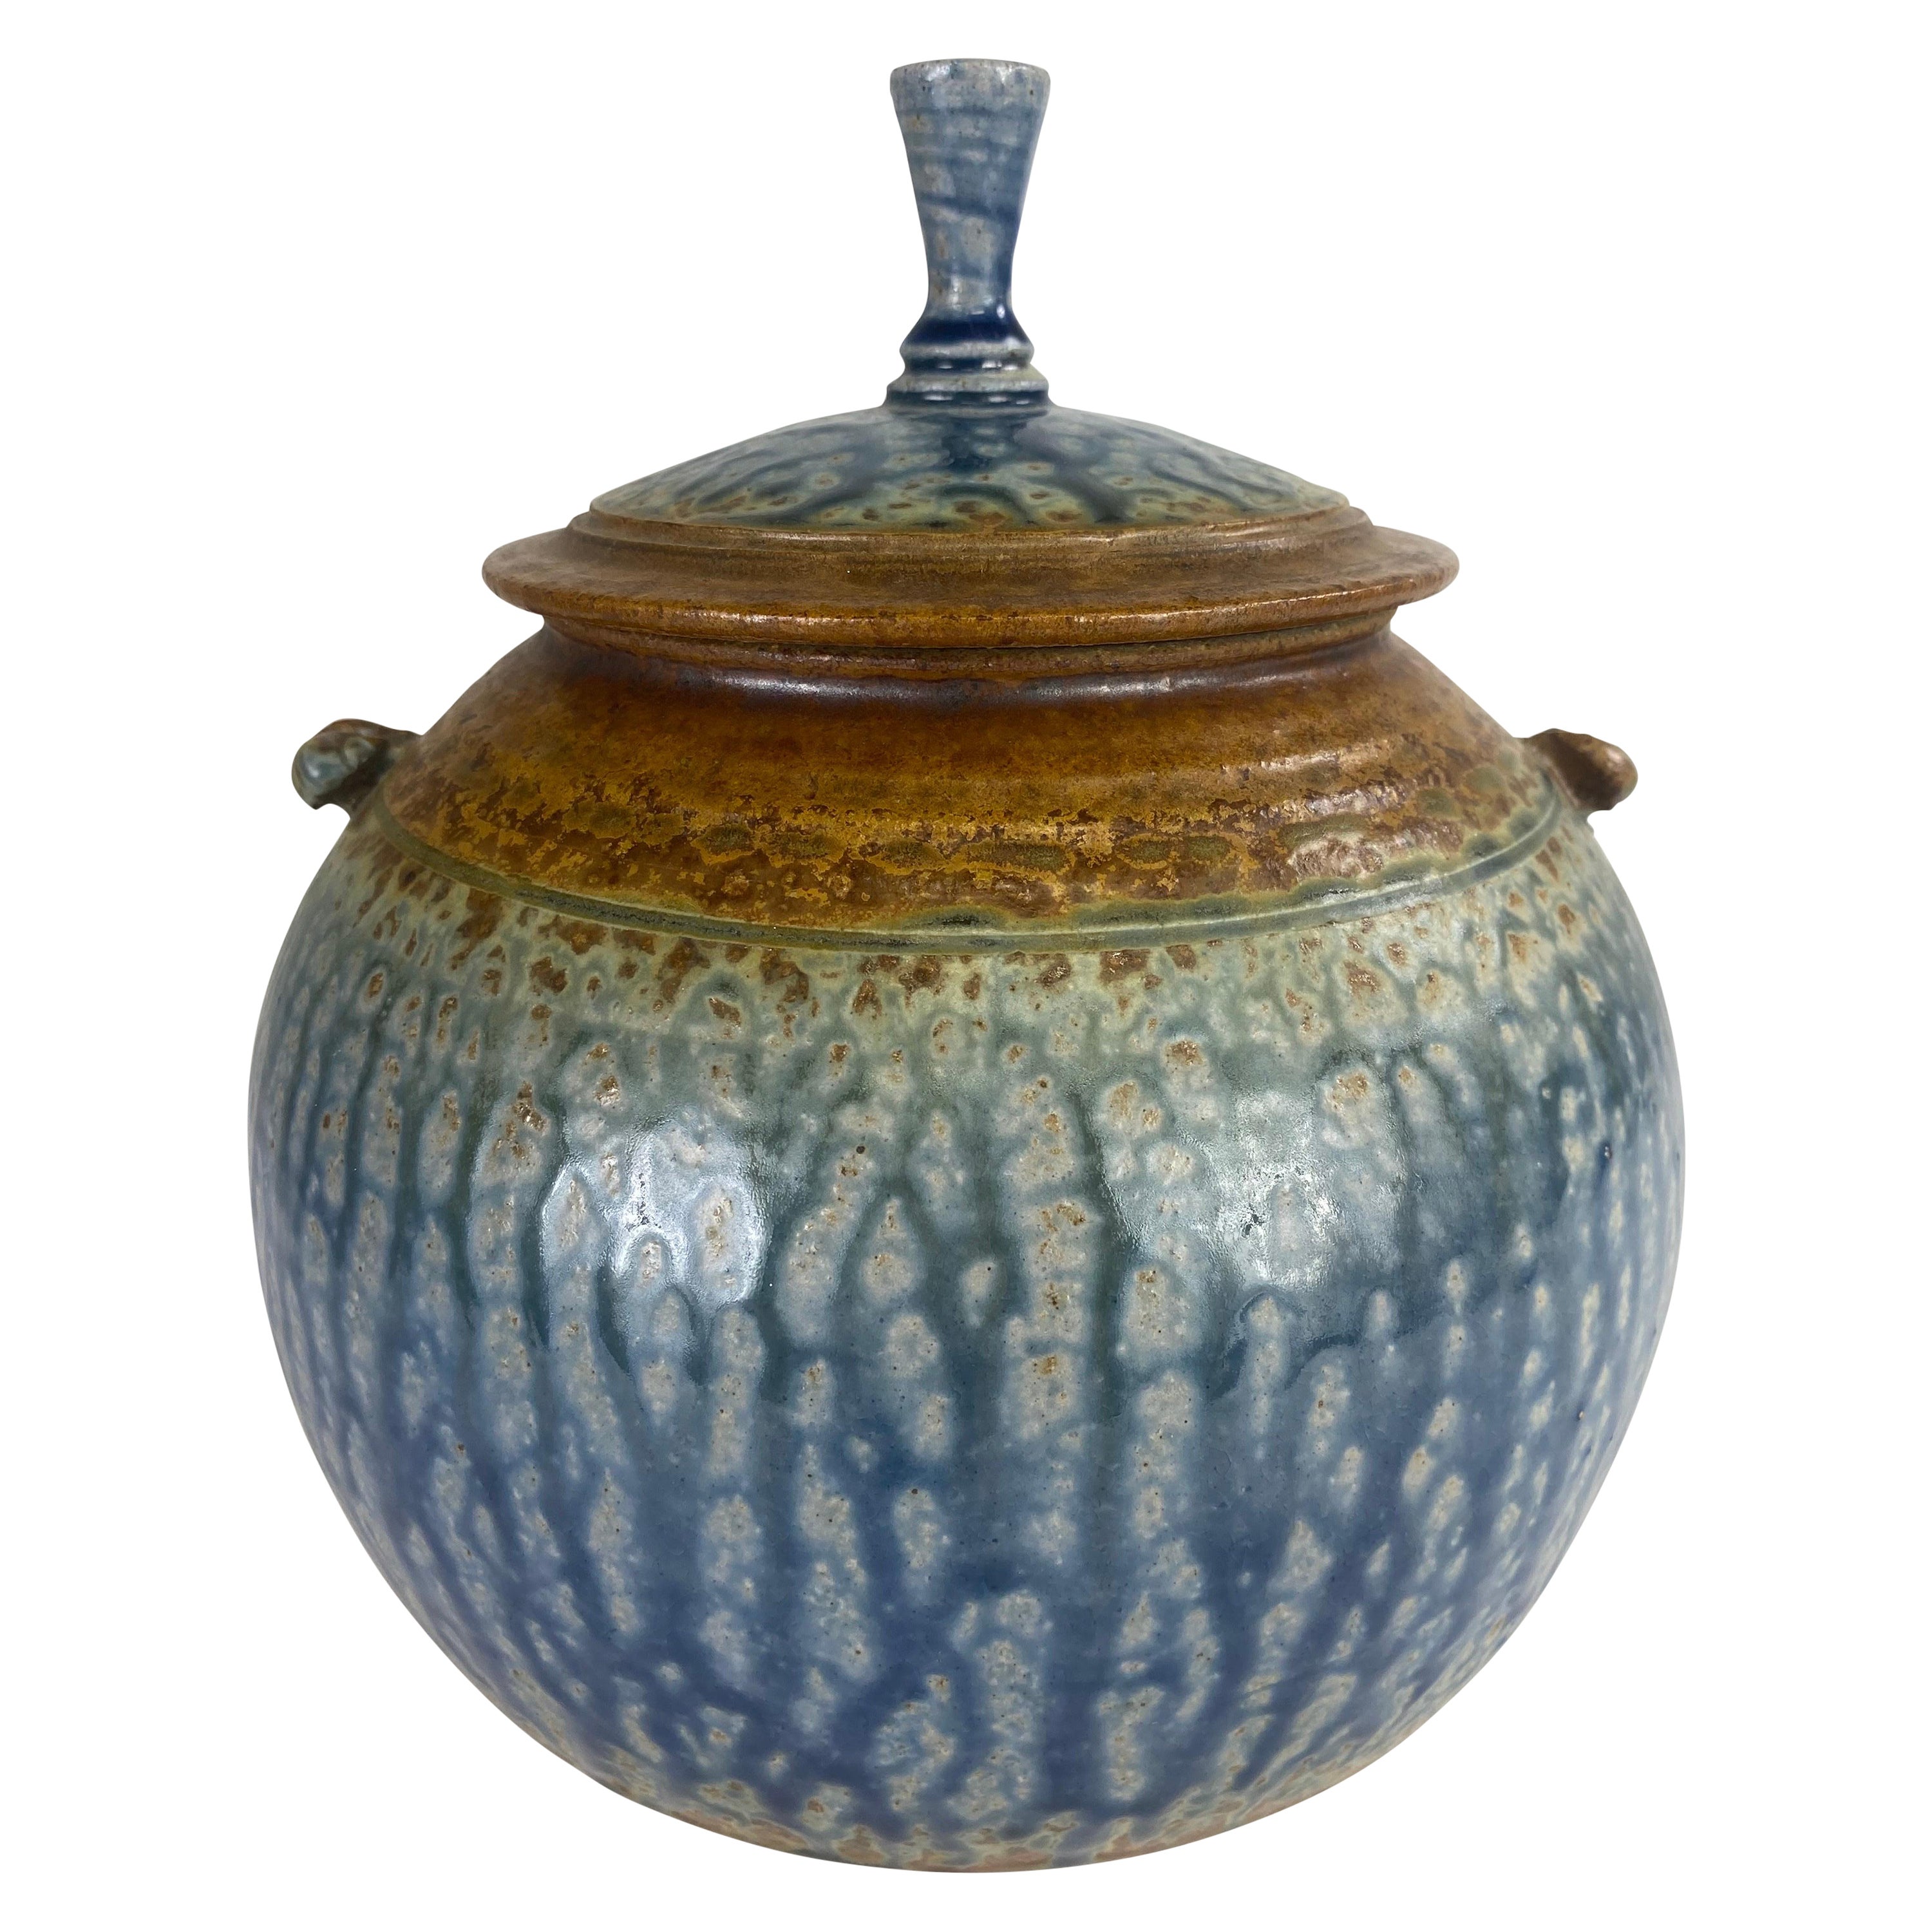 Mid century artisans studio pottery jar with lid.